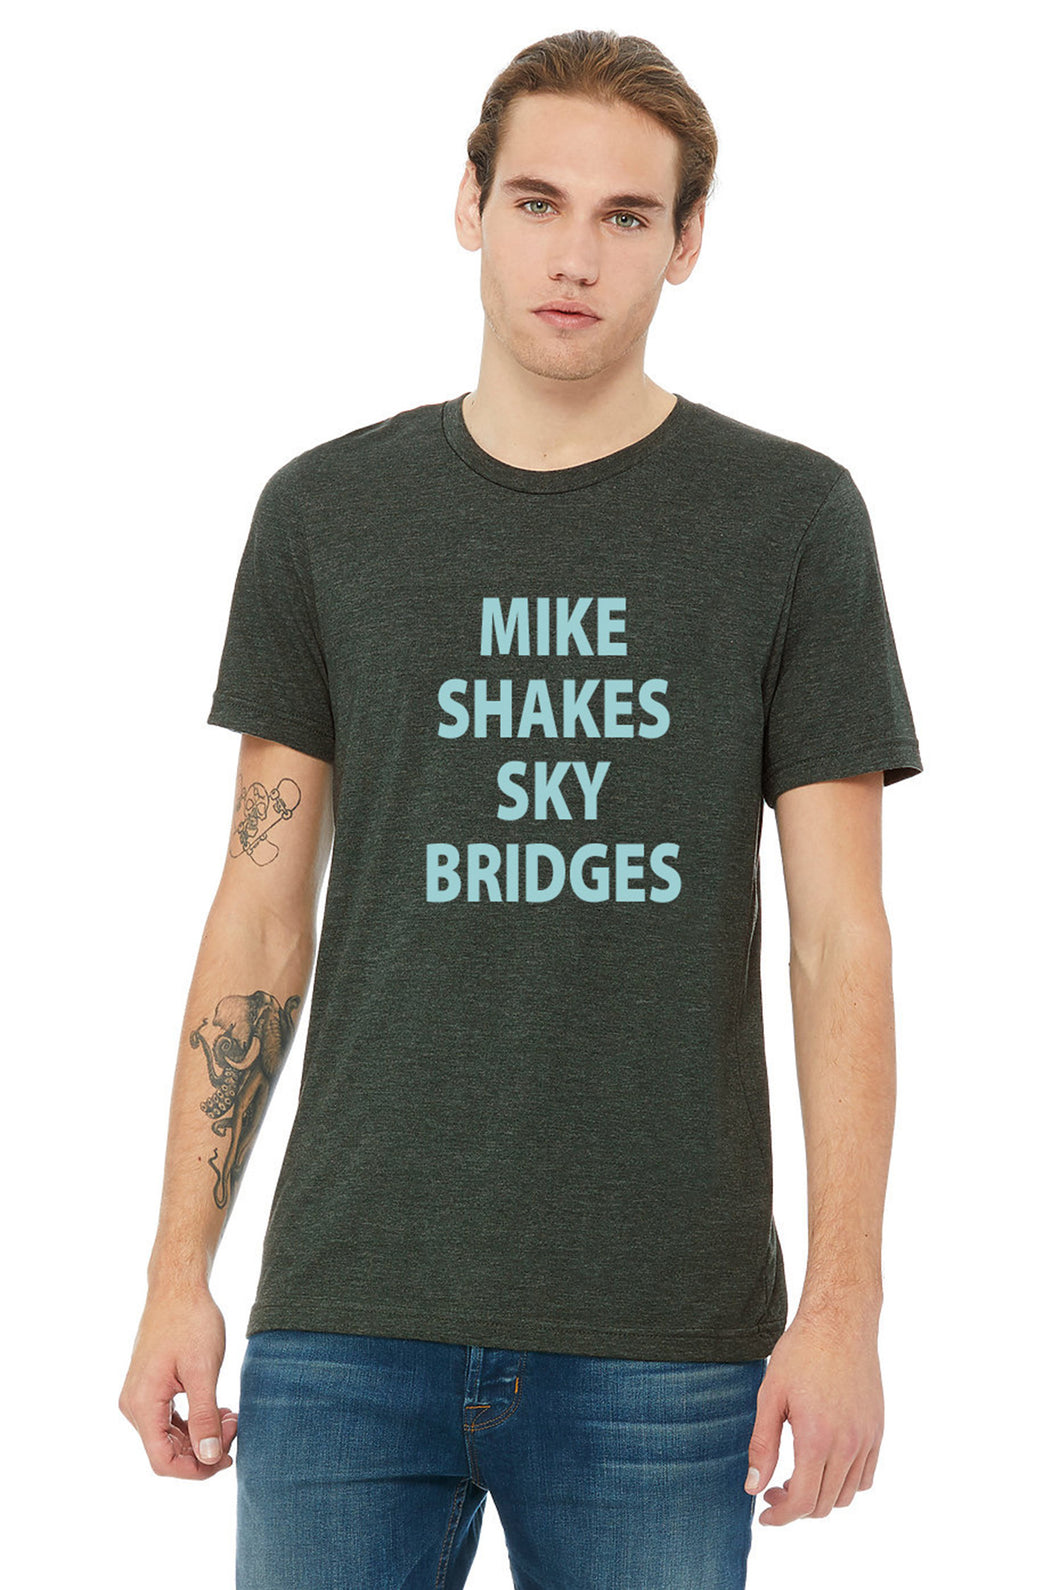 Mike Shakes Sky Bridges